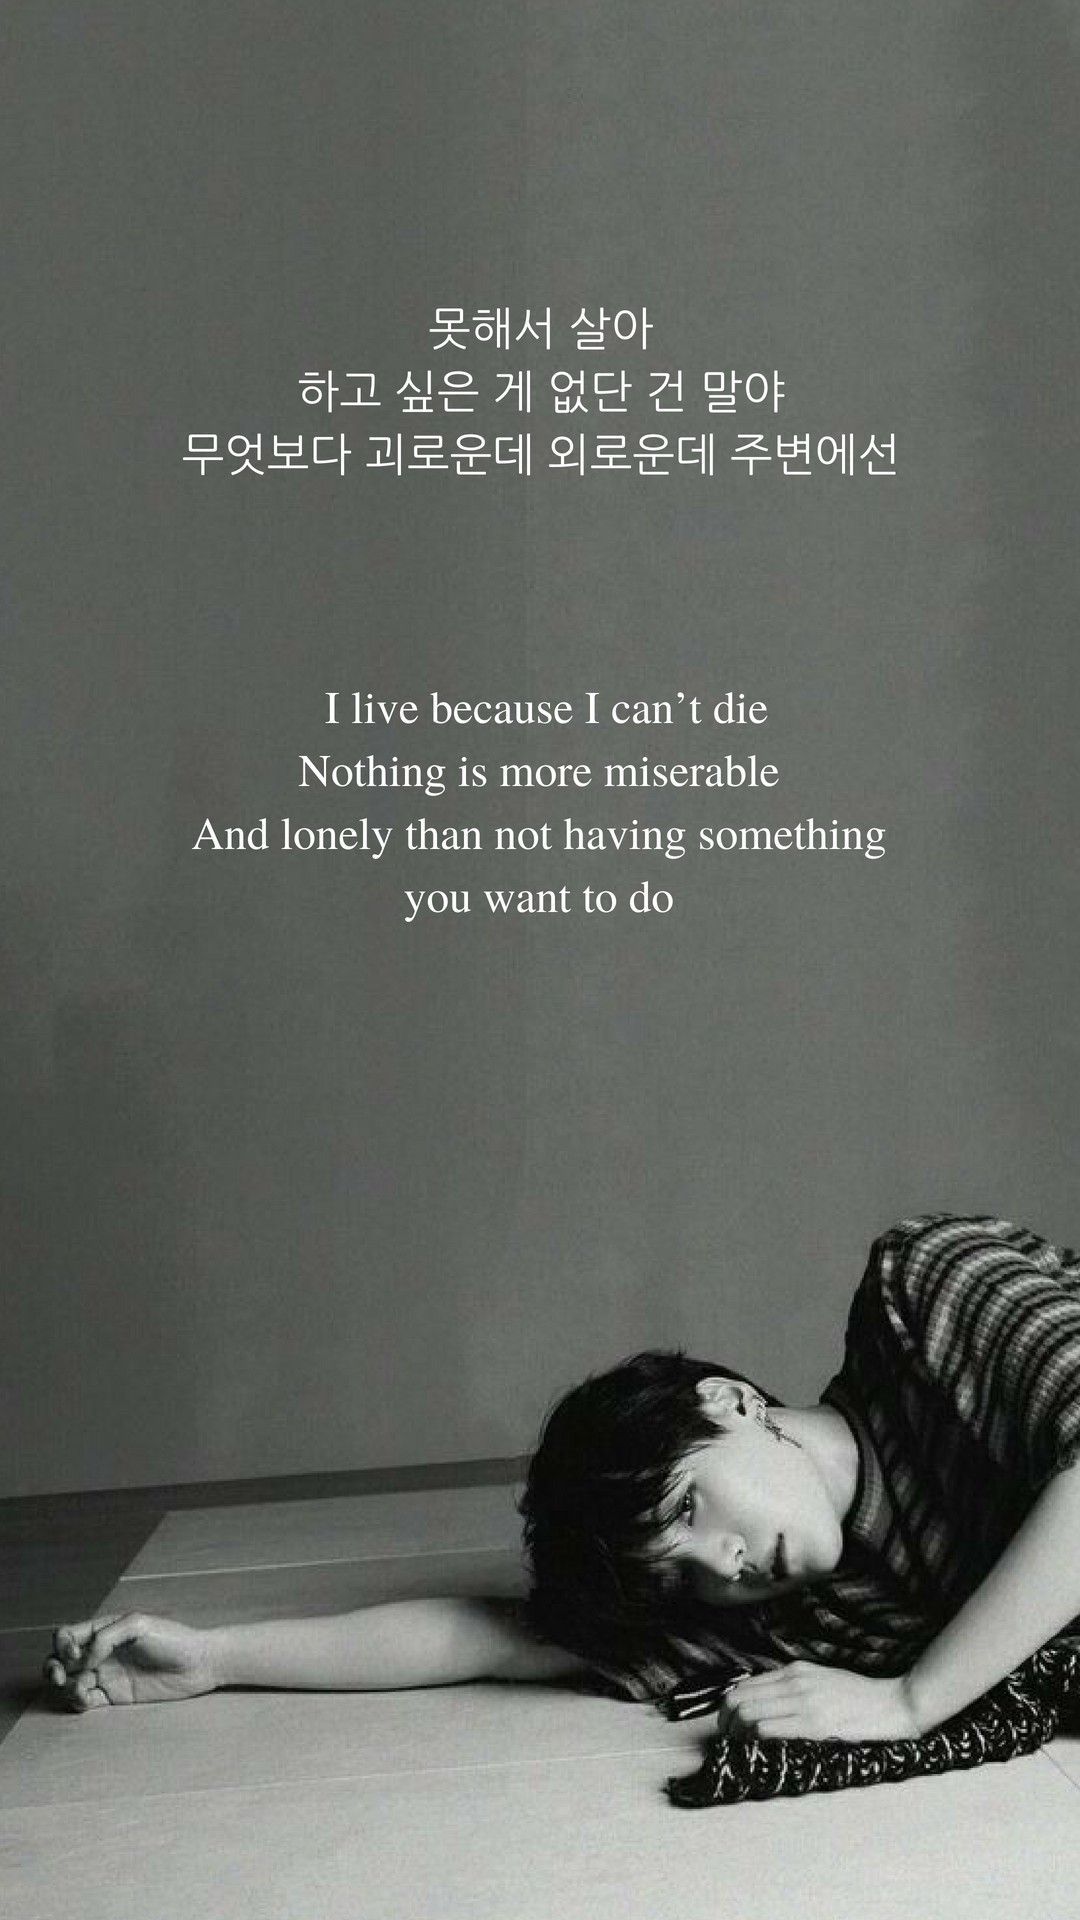 So far away by Suga (BTS) Lyrics wallpaper. Bts lyrics quotes